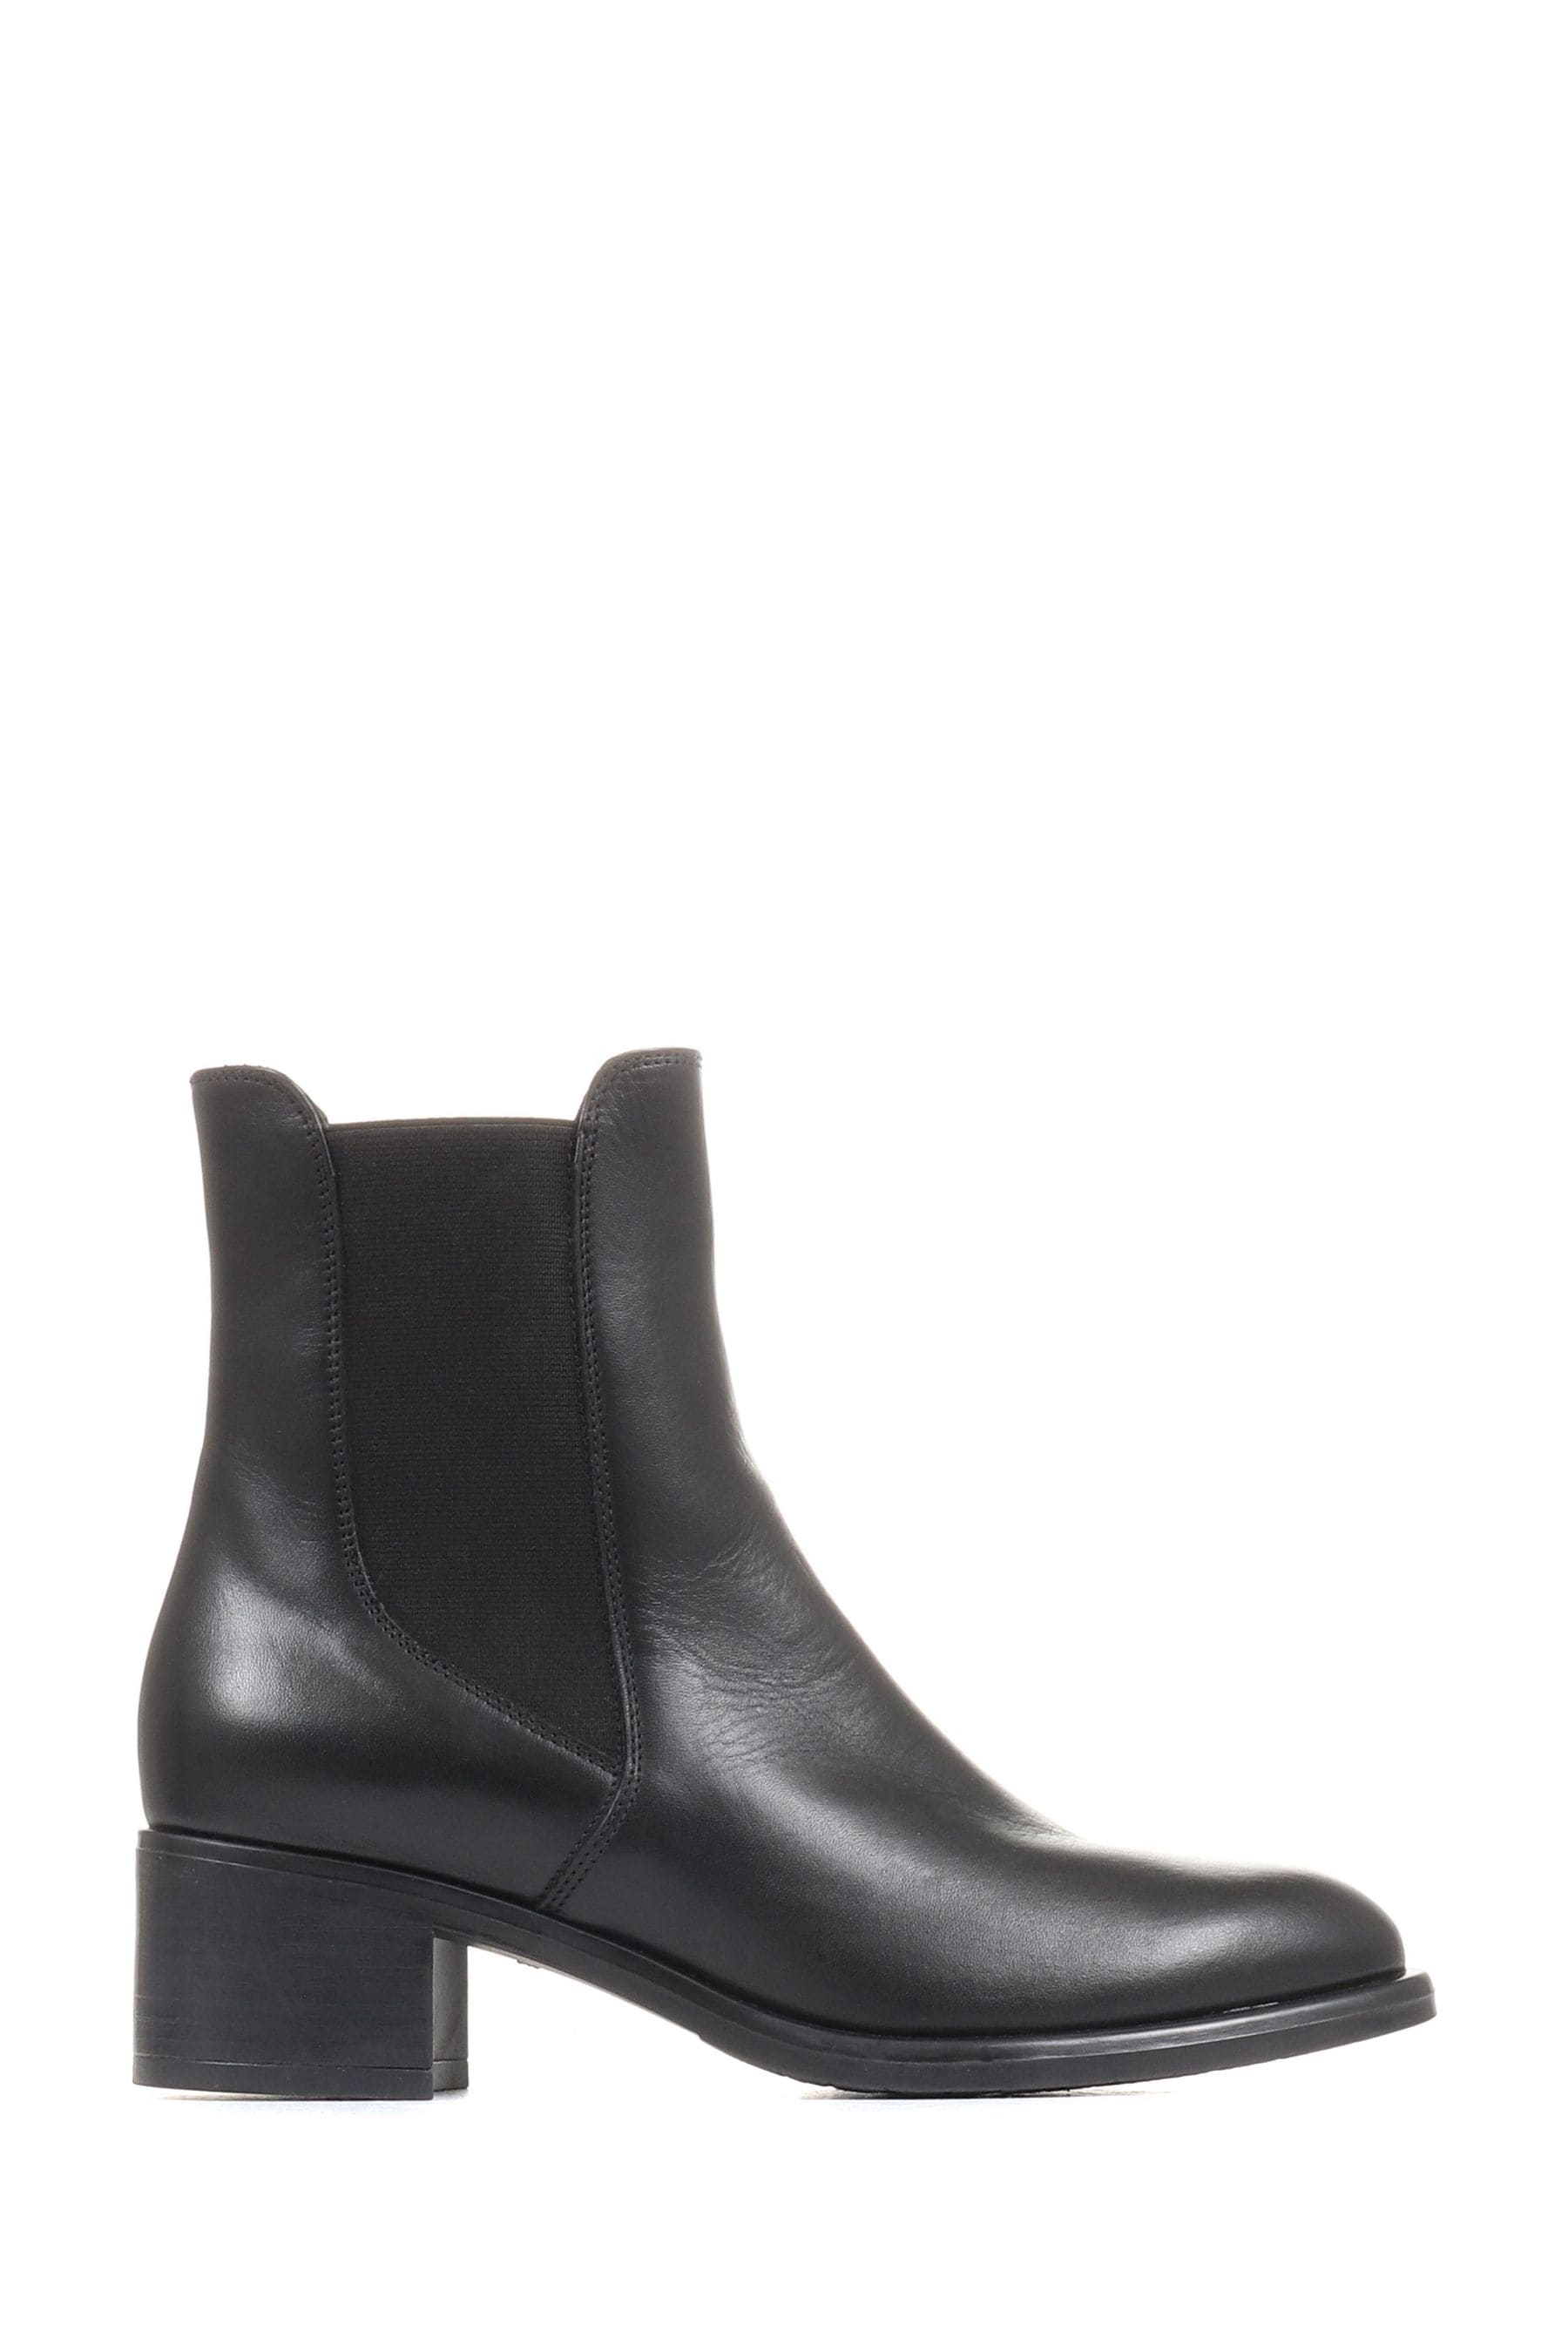 Buy Jones Bootmaker Doria Black Heeled Leather Chelsea Boots from the ...